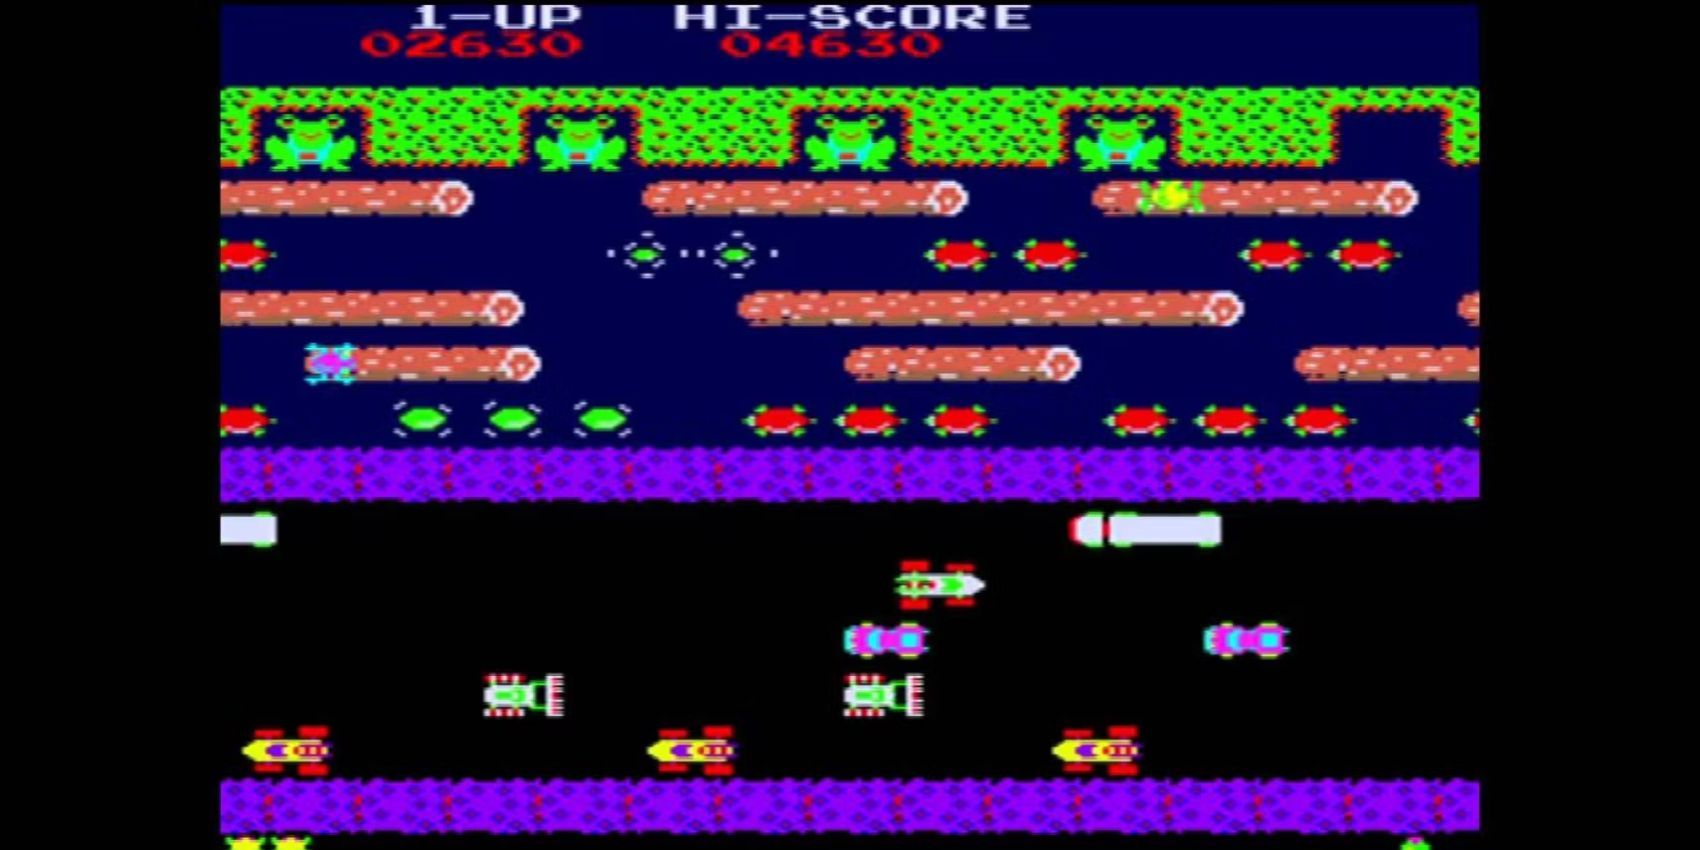 The original Frogger arcade game